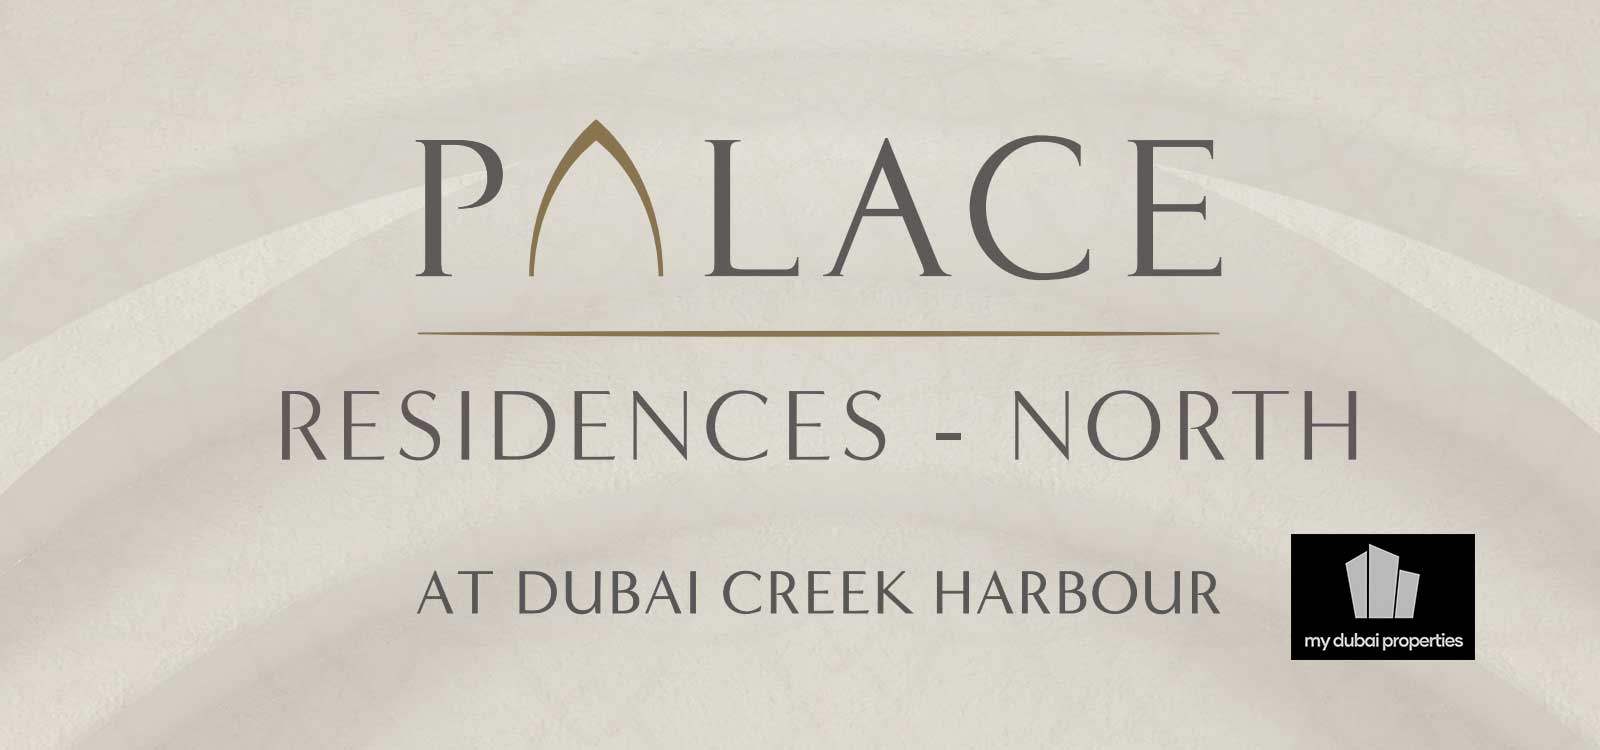 Palace Residences North at Dubai Creek Harbour